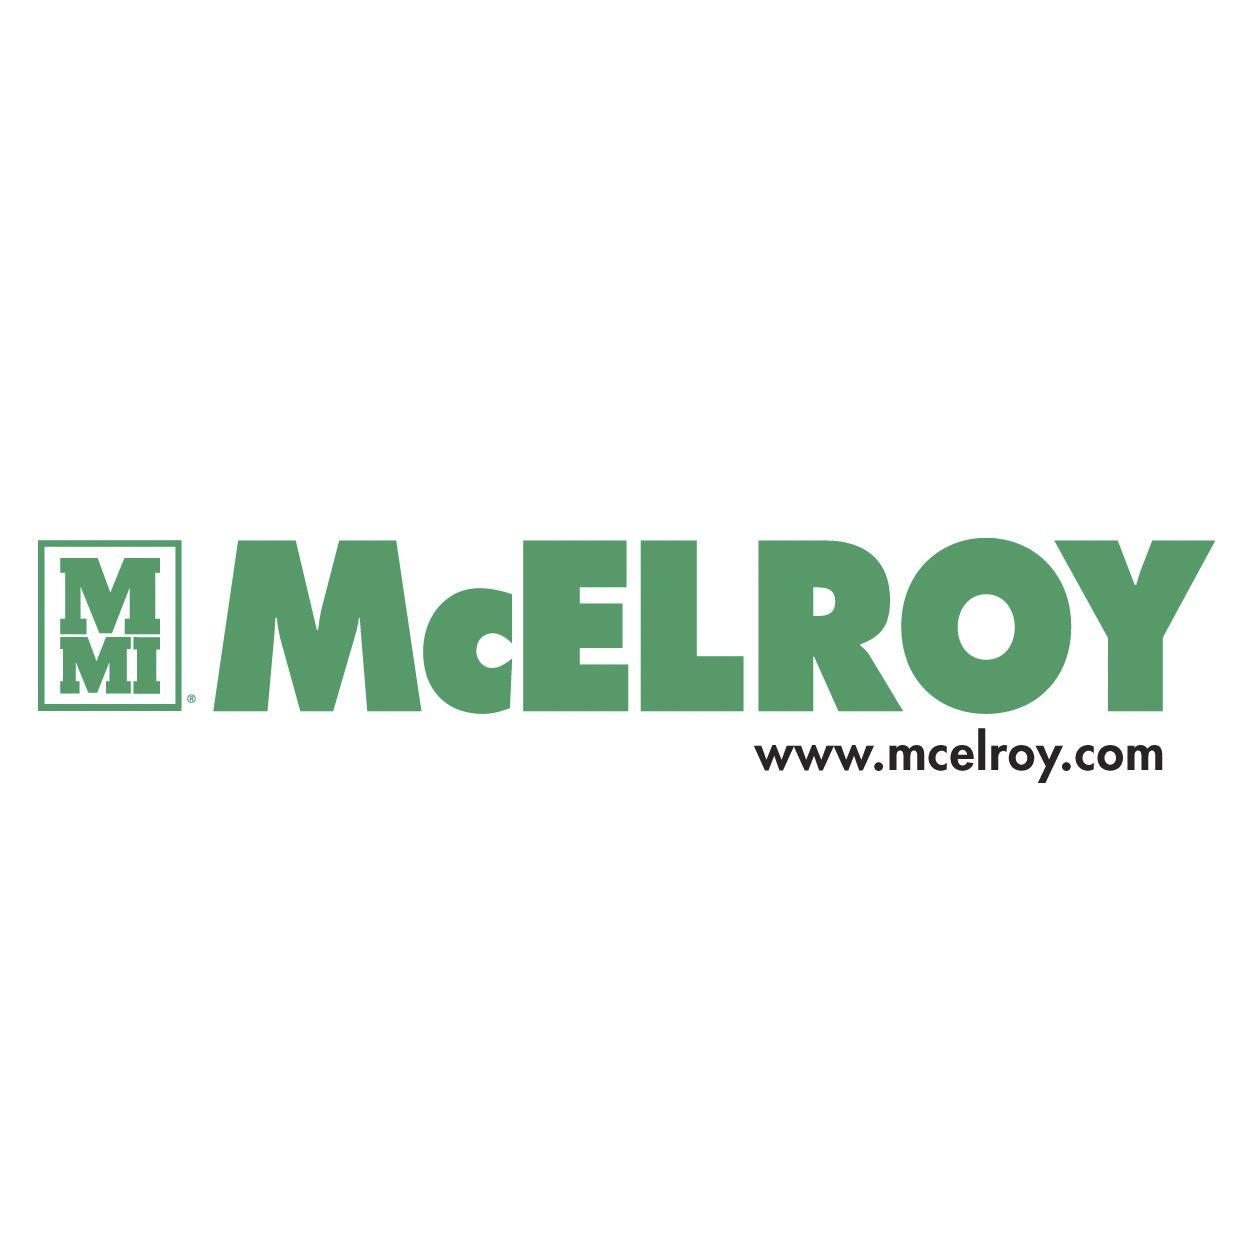 McElroy Logo - McElroy Partners with Netafim to Grow HDPE Equipment Business